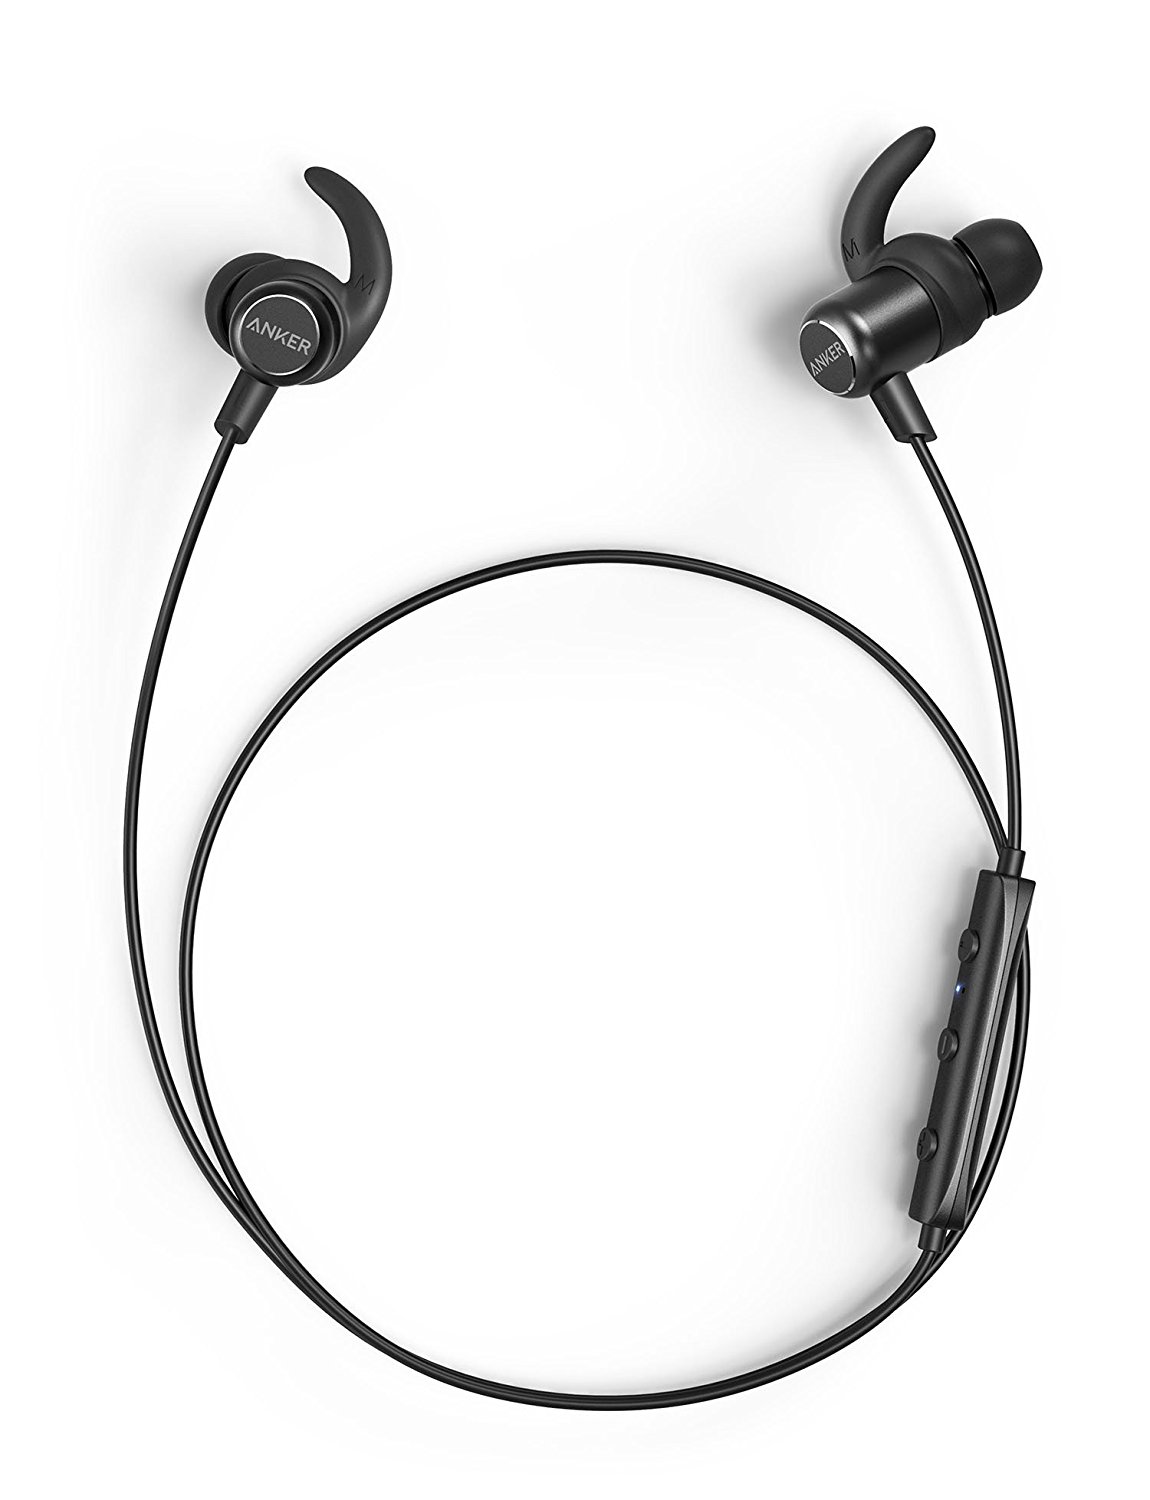 Anker SoundBuds Slim+ wireless Bluetooth 4.1 earbuds for $22